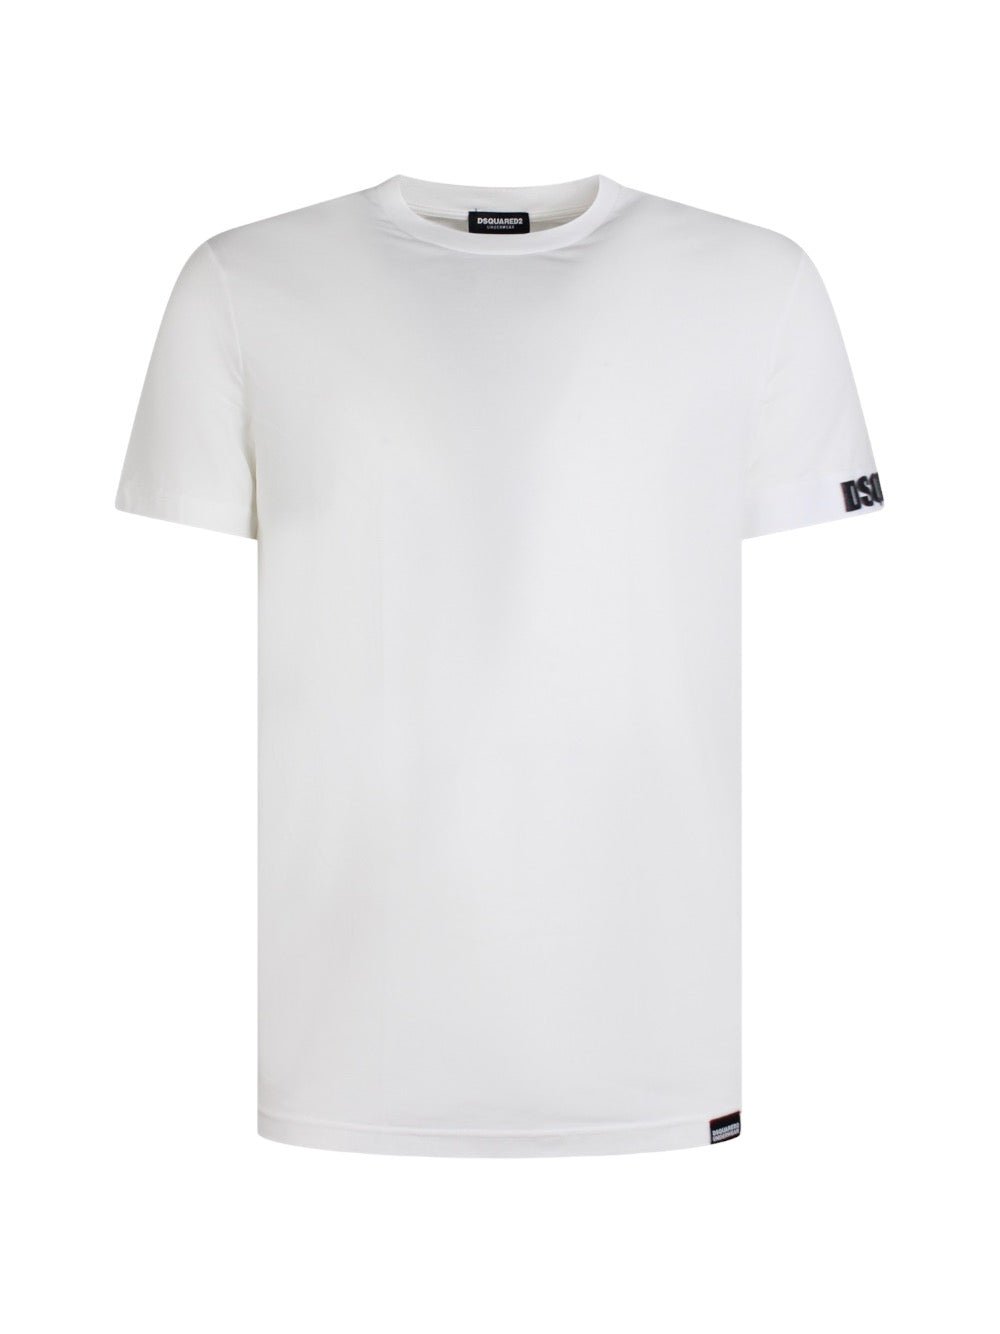 Dsquared2 D9M3S4530 Underwear T-Shirt - 100 White - Escape Menswear